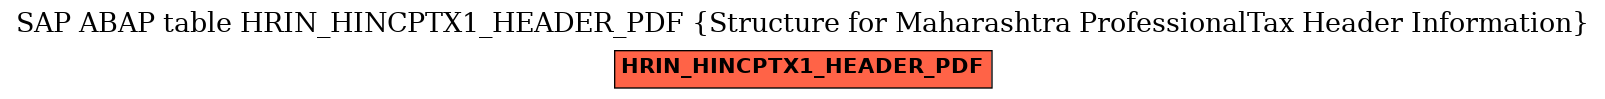 E-R Diagram for table HRIN_HINCPTX1_HEADER_PDF (Structure for Maharashtra ProfessionalTax Header Information)